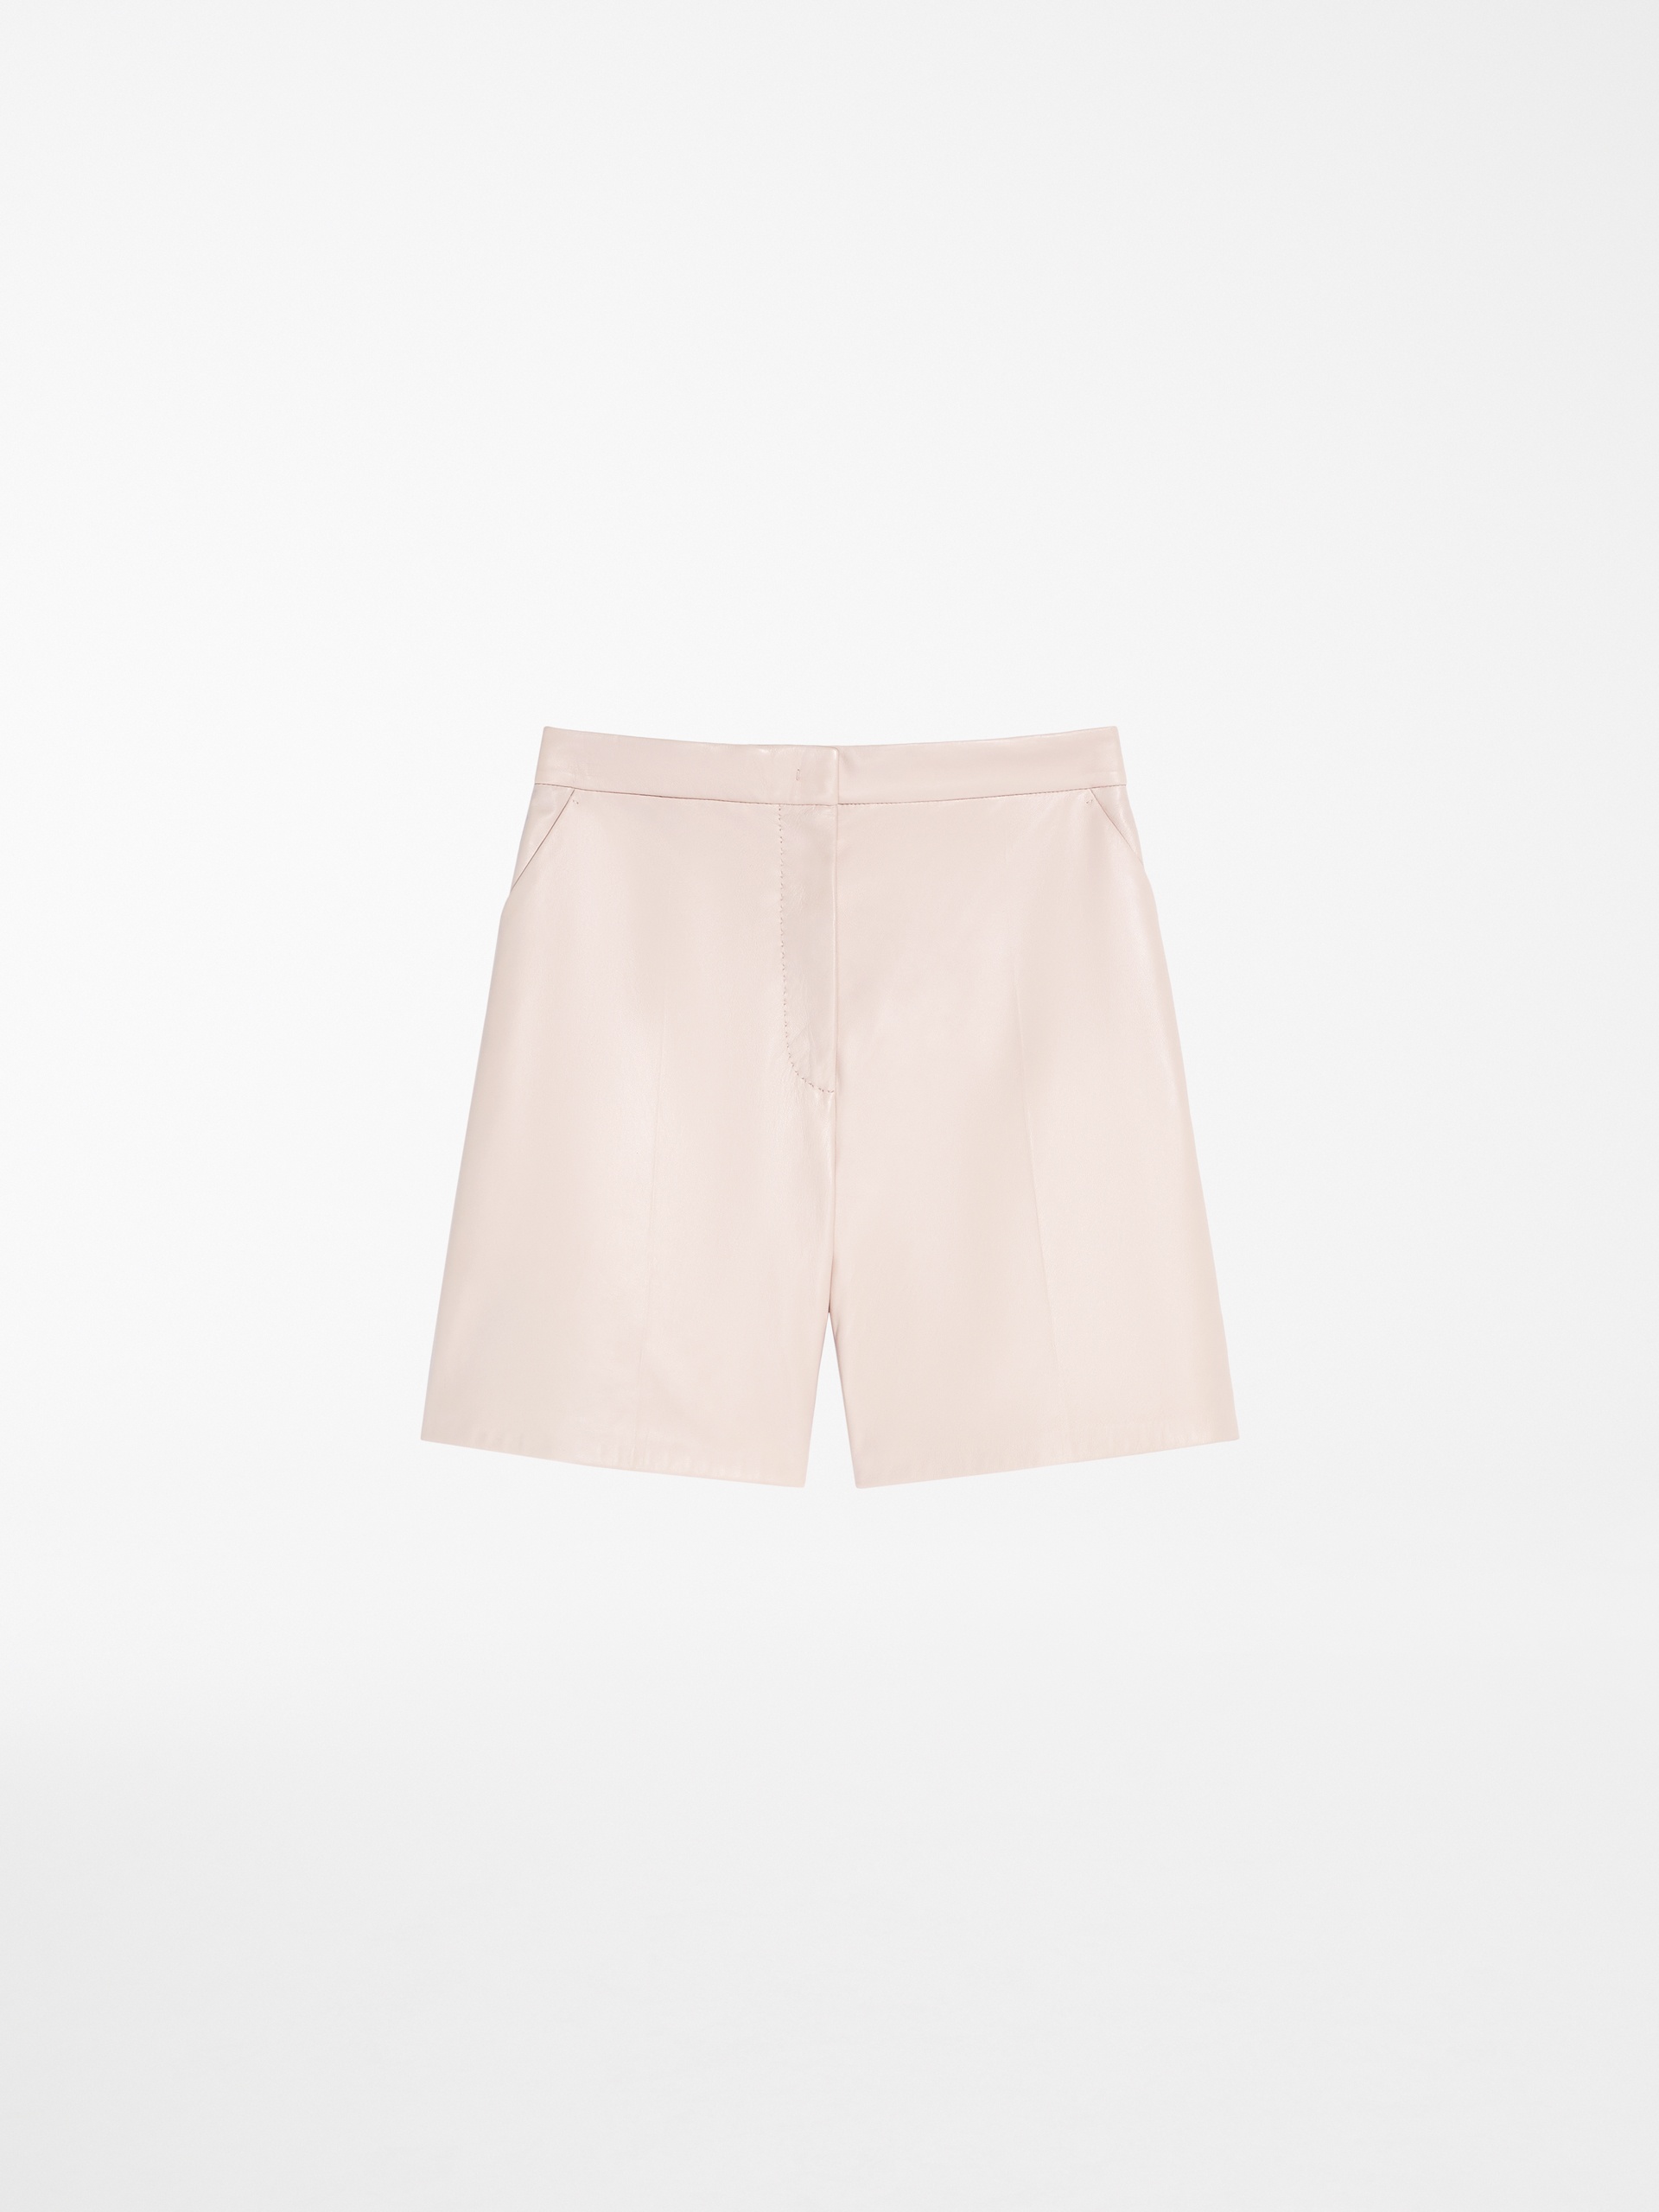 Nappa leather shorts - 1